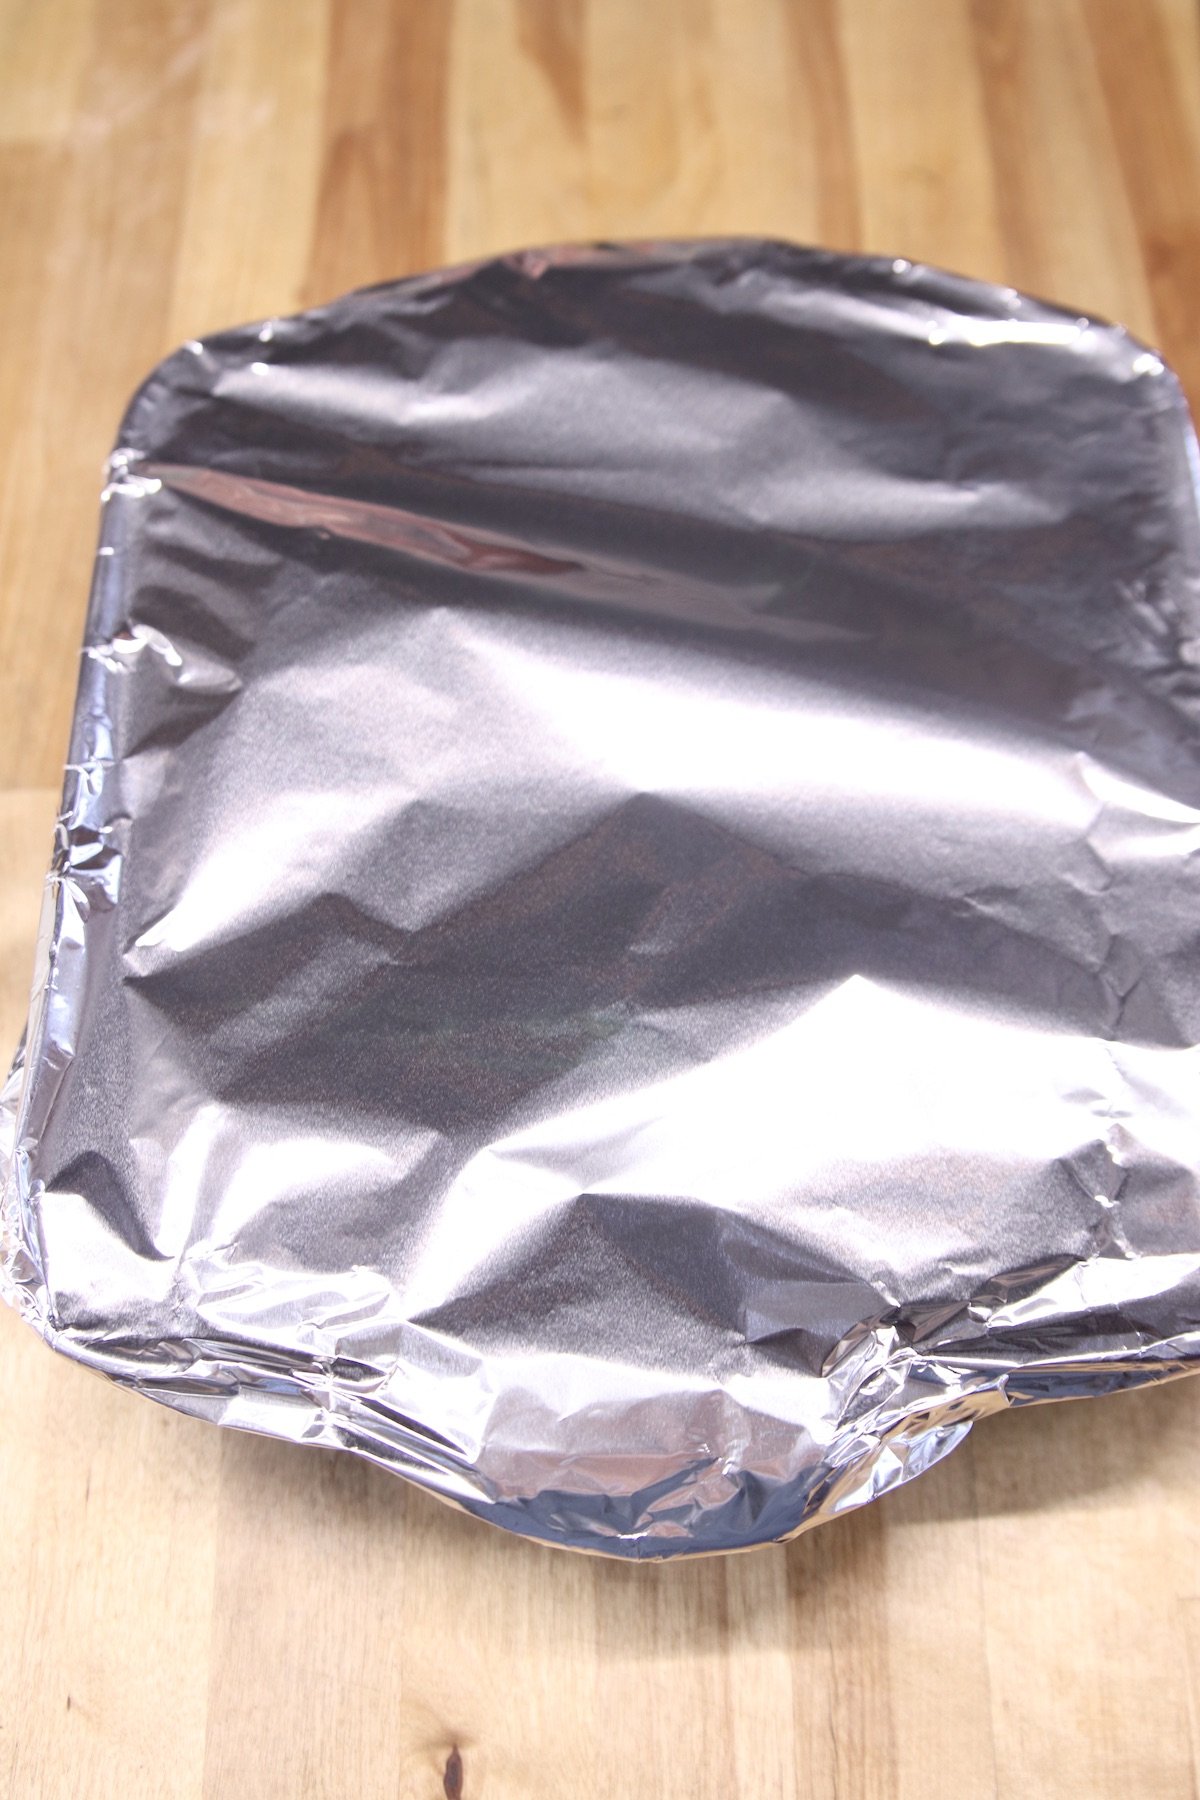 foil covered casserole